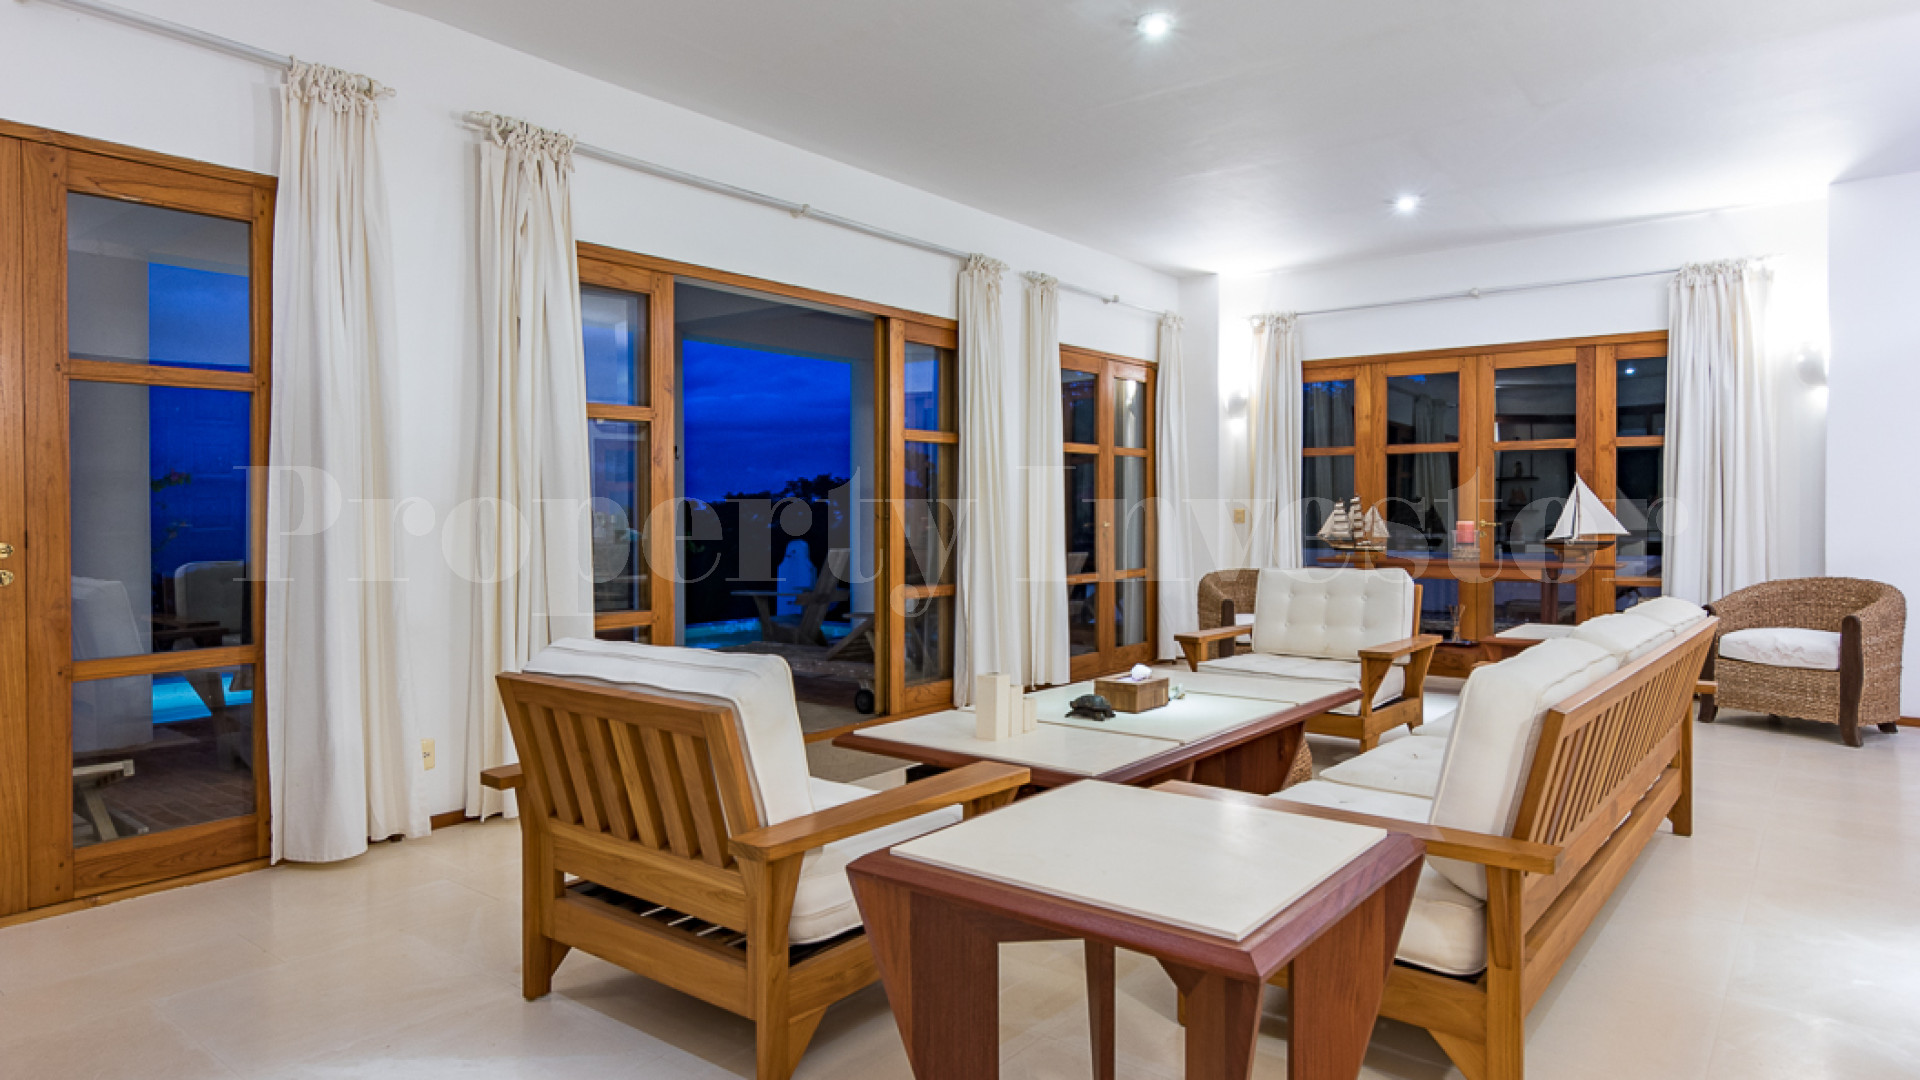 Fabulous 5 Bedroom Luxury Ocean View Designer Villa for Sale in Pedasi, Panama